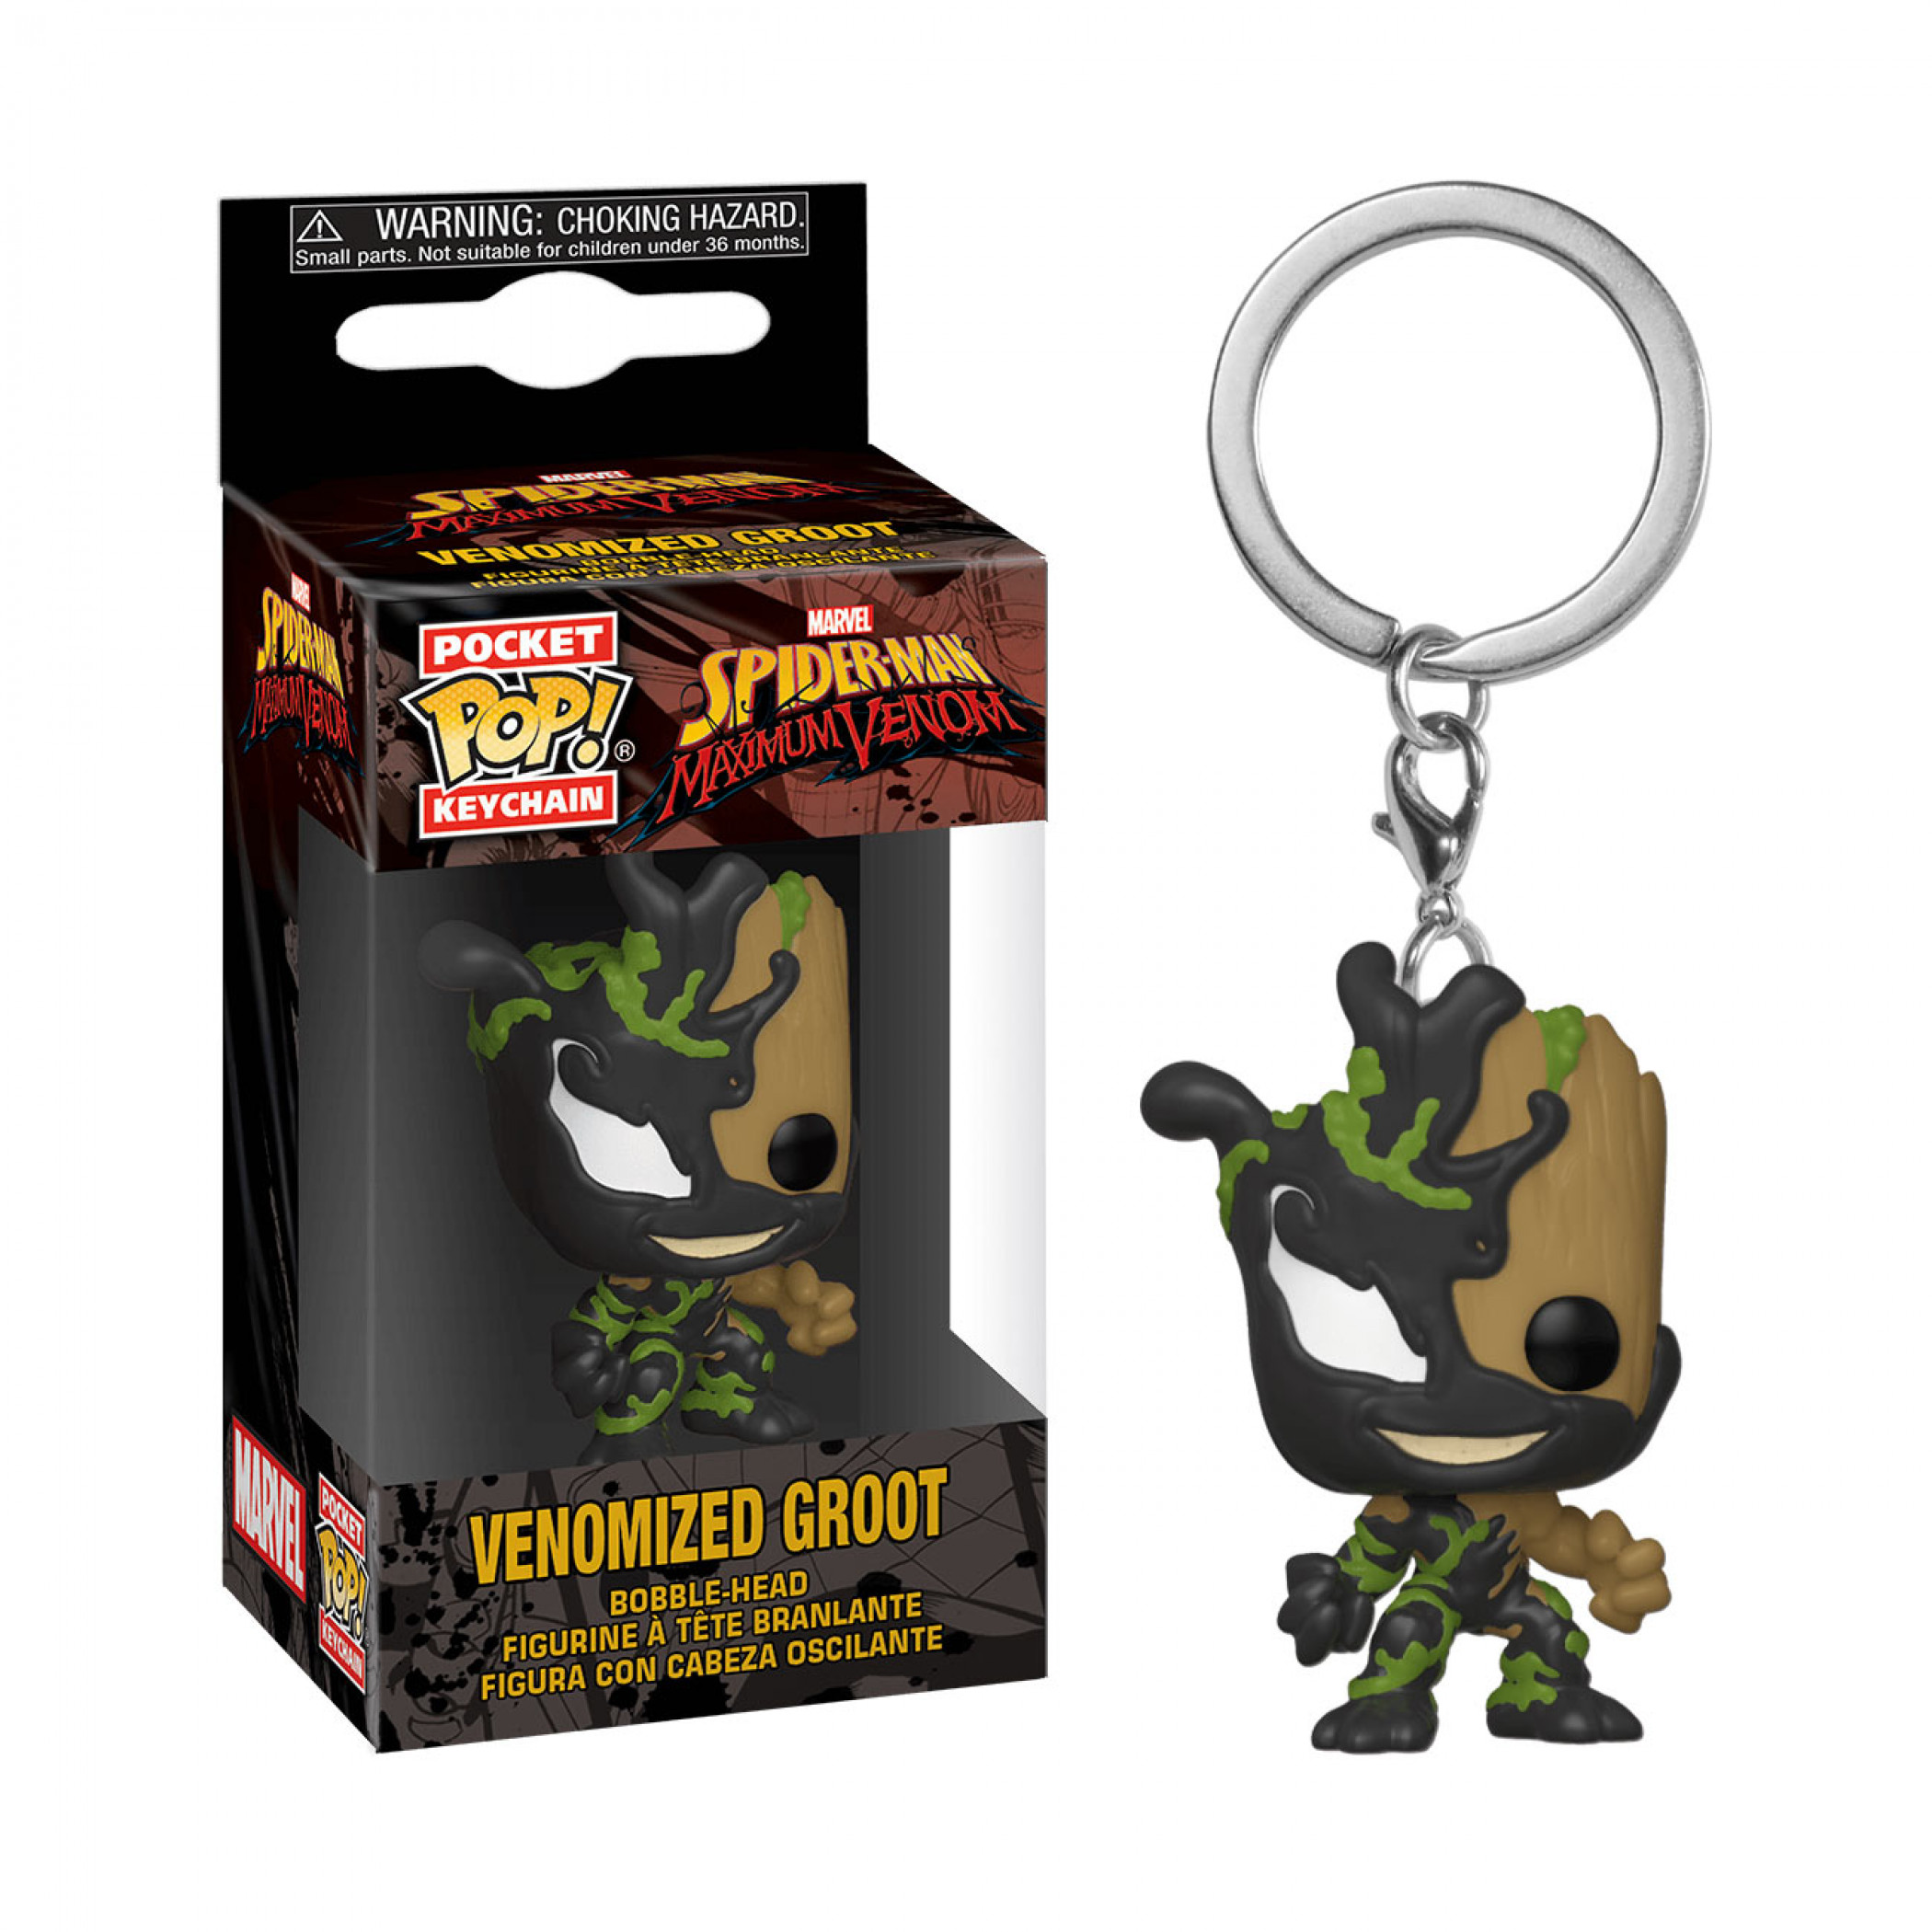 Venom and Groot Mashup Funko Pop! Keychain